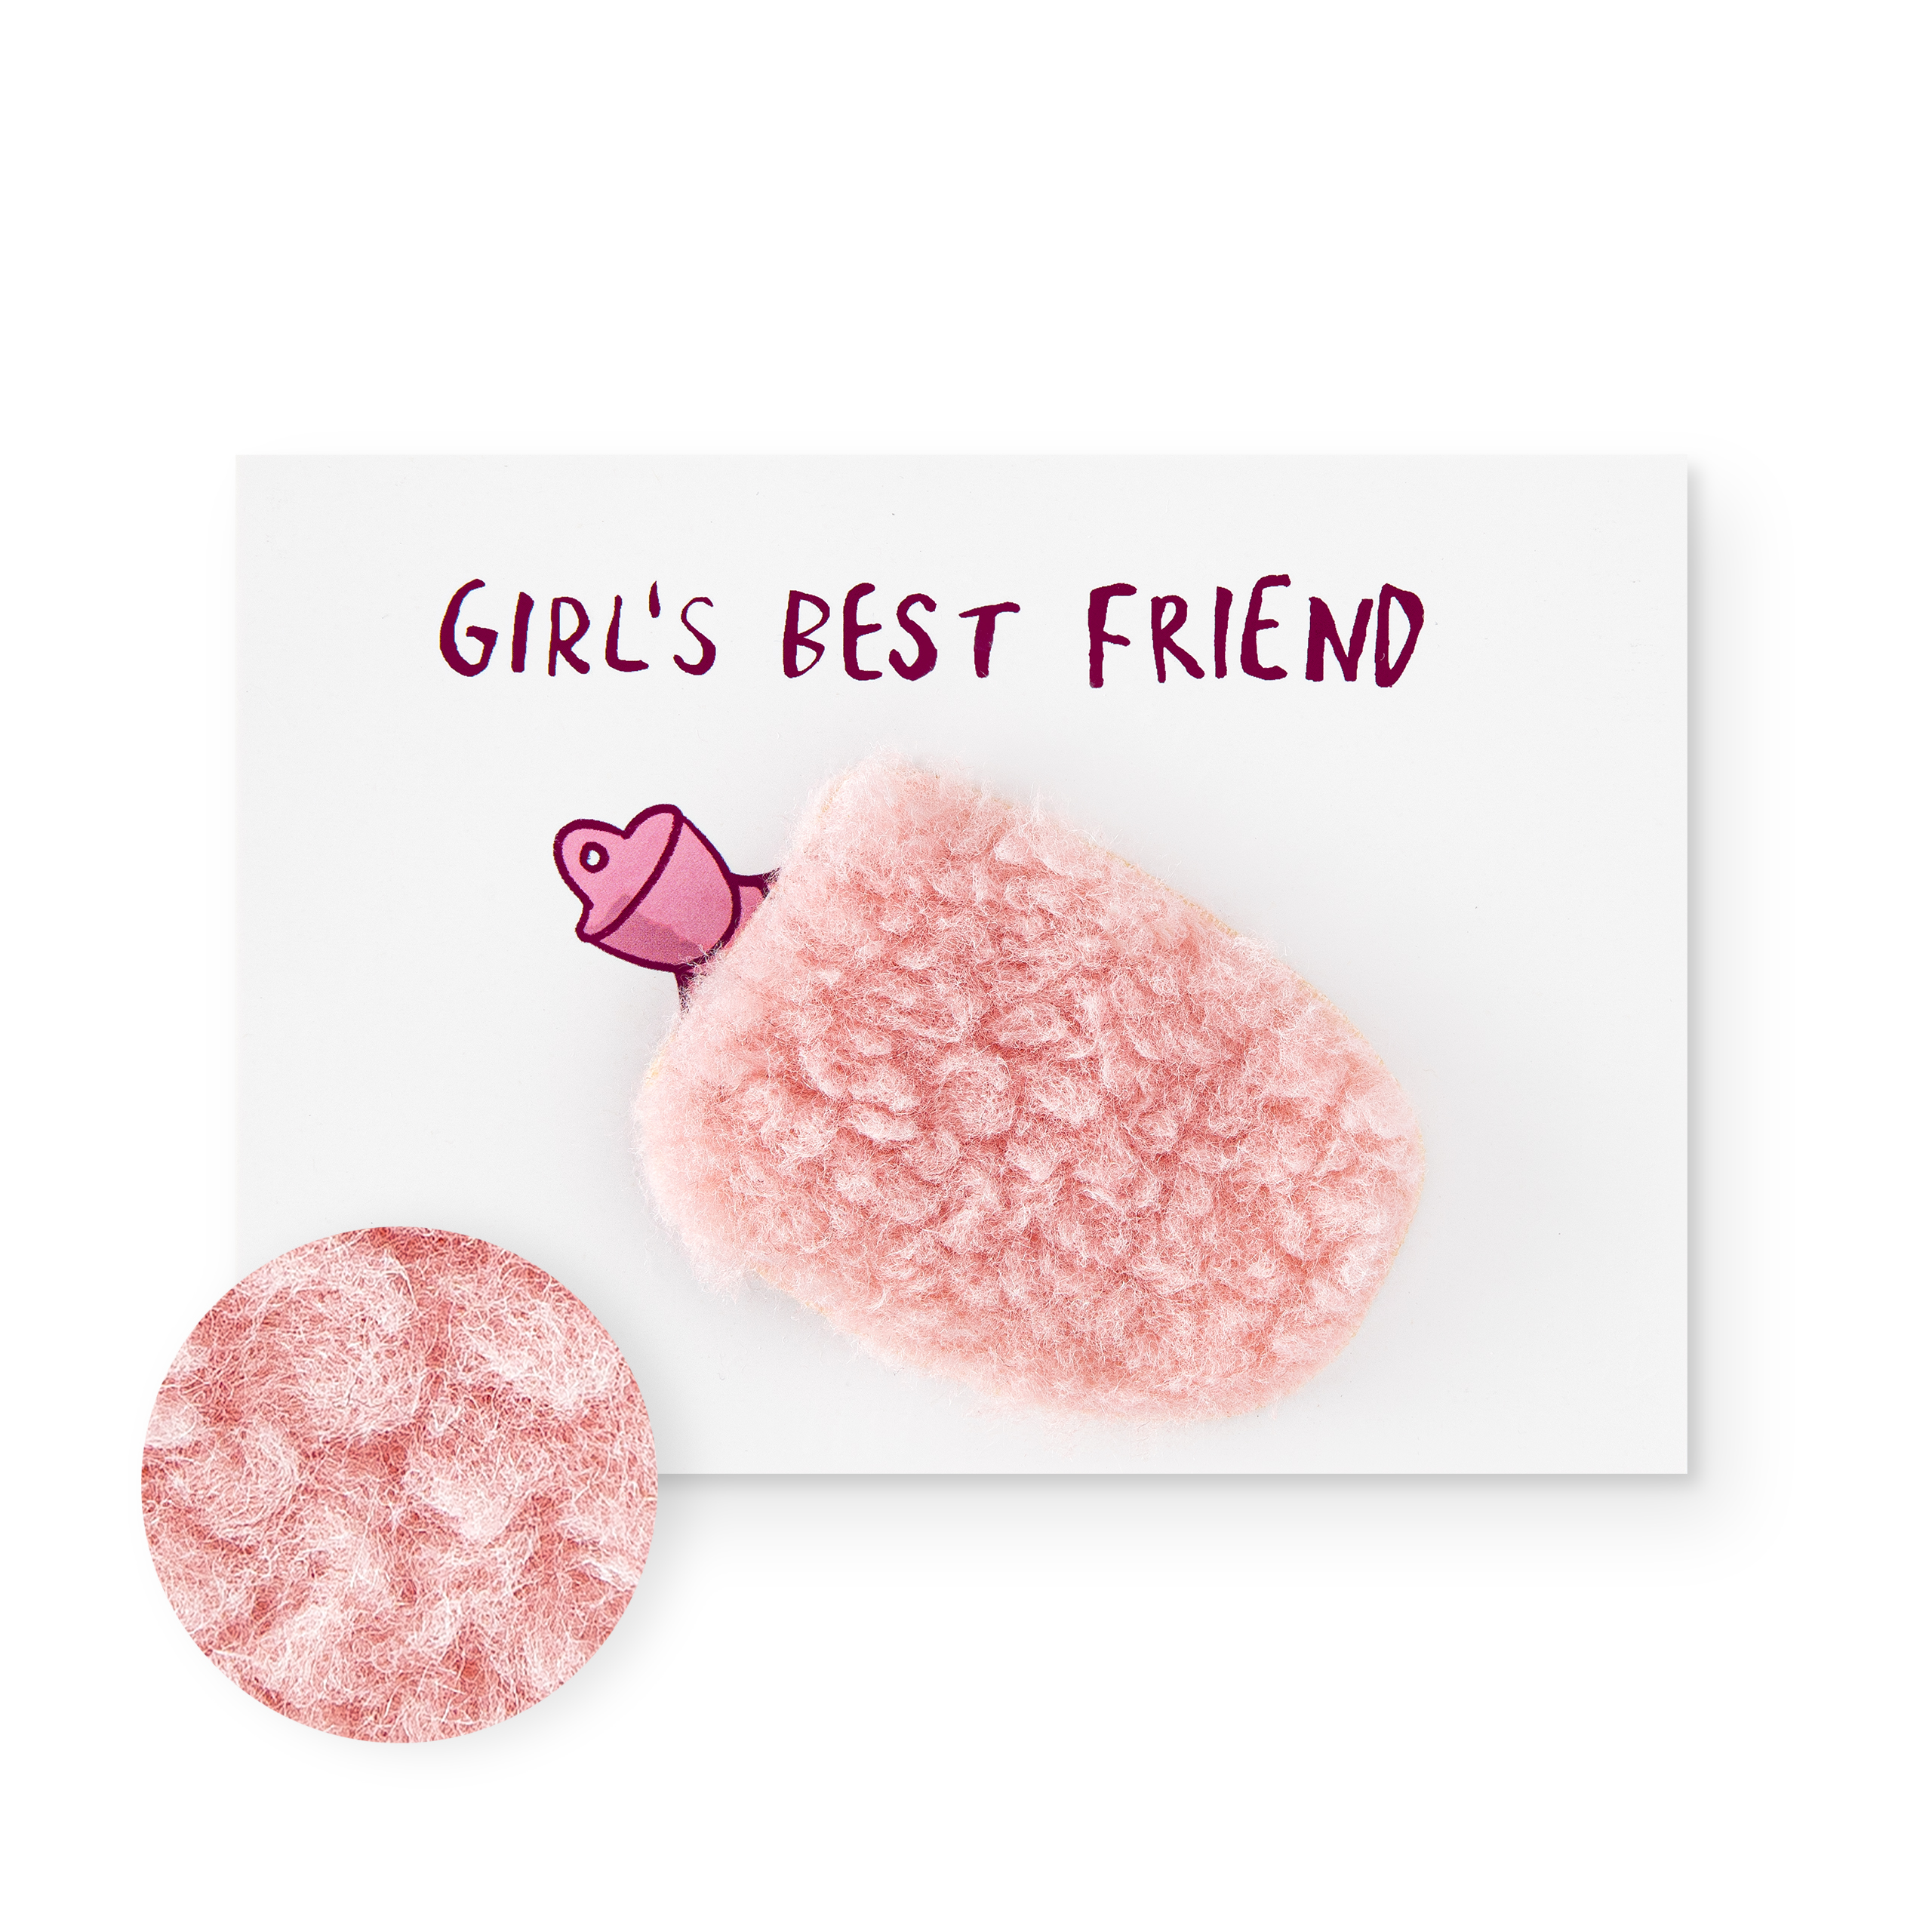 Plüschkarte "Girl's best friends" 